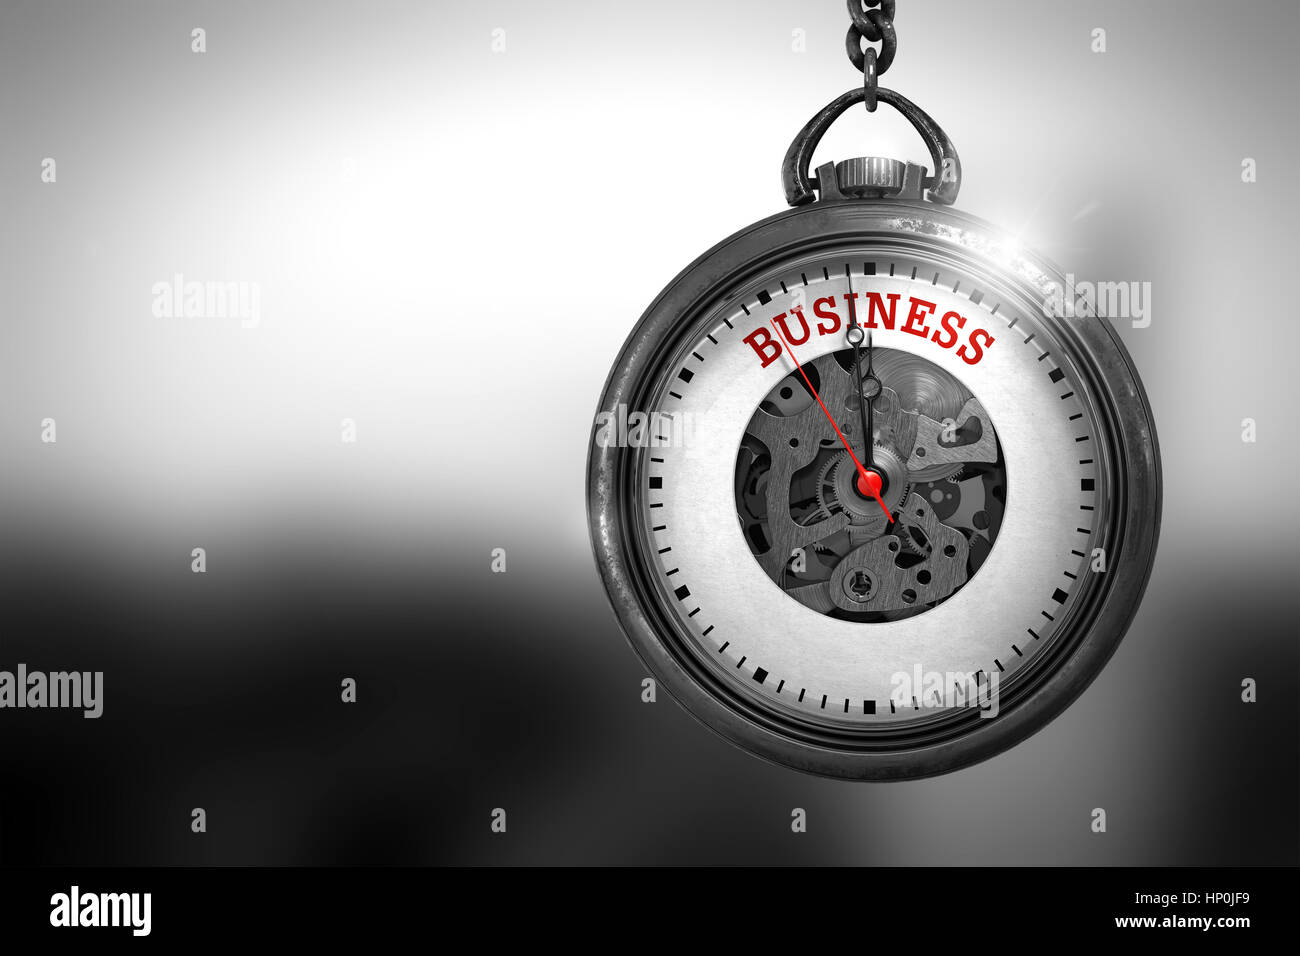 Business on Pocket Watch Face. 3D Illustration. Stock Photo